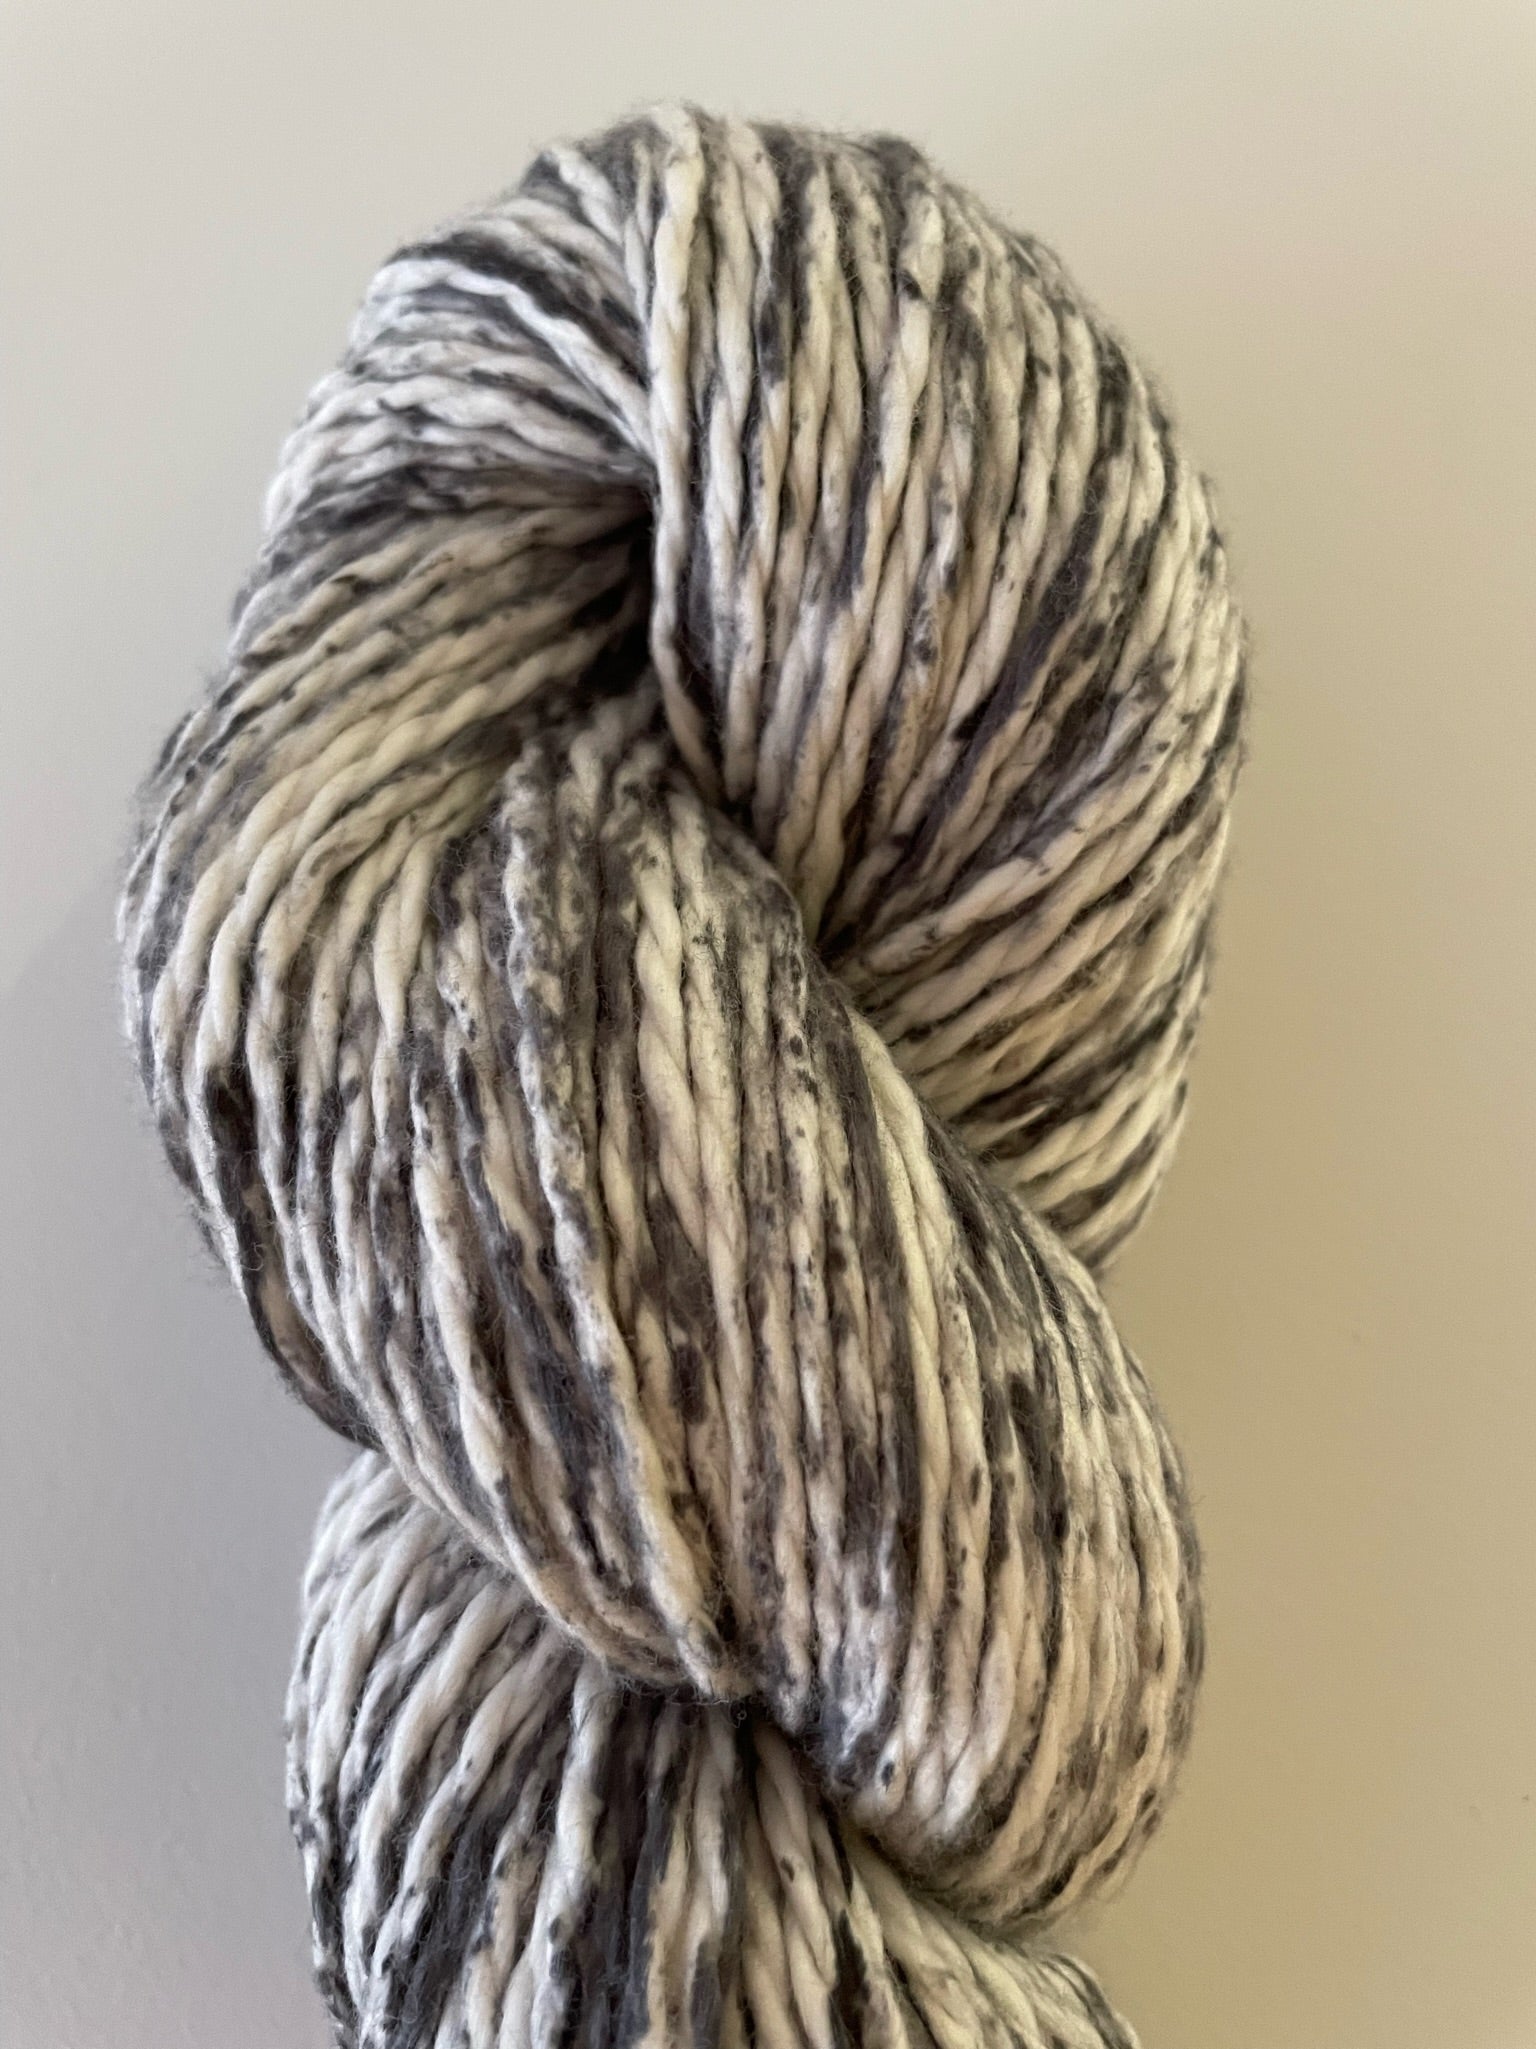 Printed Organic Cotton Yarn - Sundrop (# 2207), Blue Sky Fibers